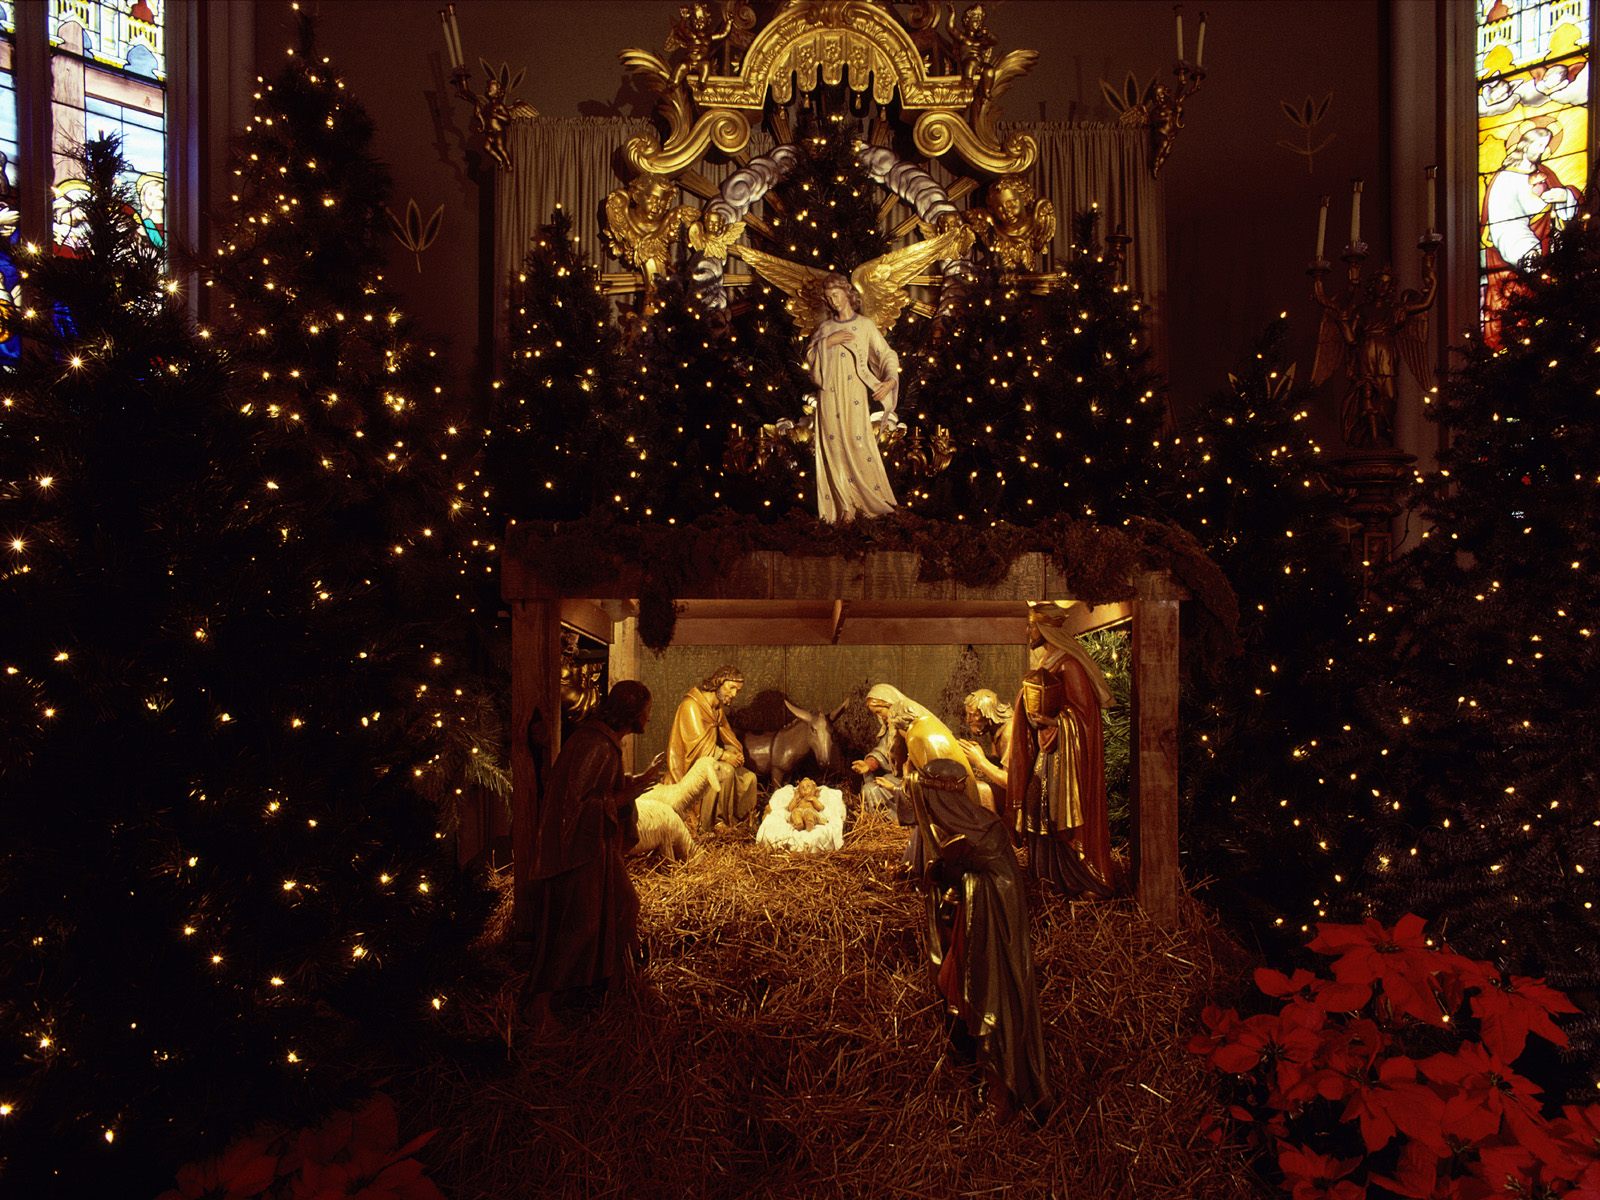 Beautiful Scene Of Christmas Night With The Birth Of Baby Jesus 2012